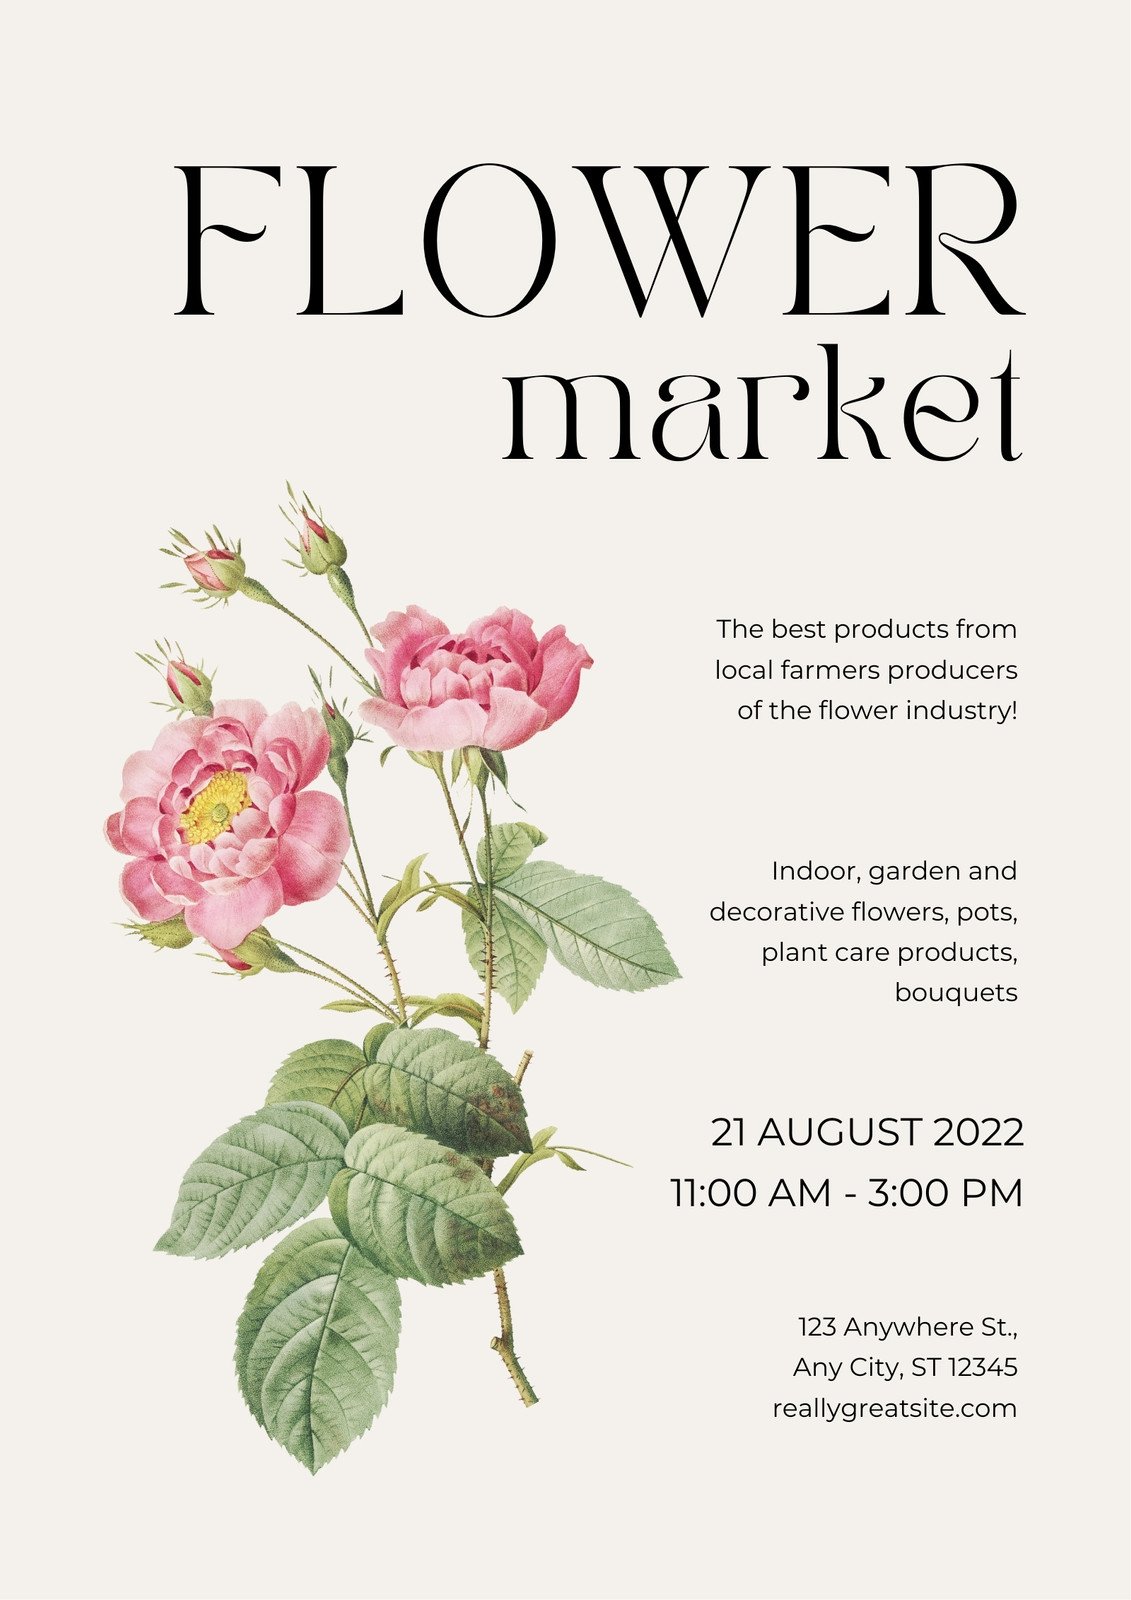 https://marketplace.canva.com/EAFGfJCrHCE/1/0/1131w/canva-beige-retro-flower-market-poster-jyq49IwJbAM.jpg